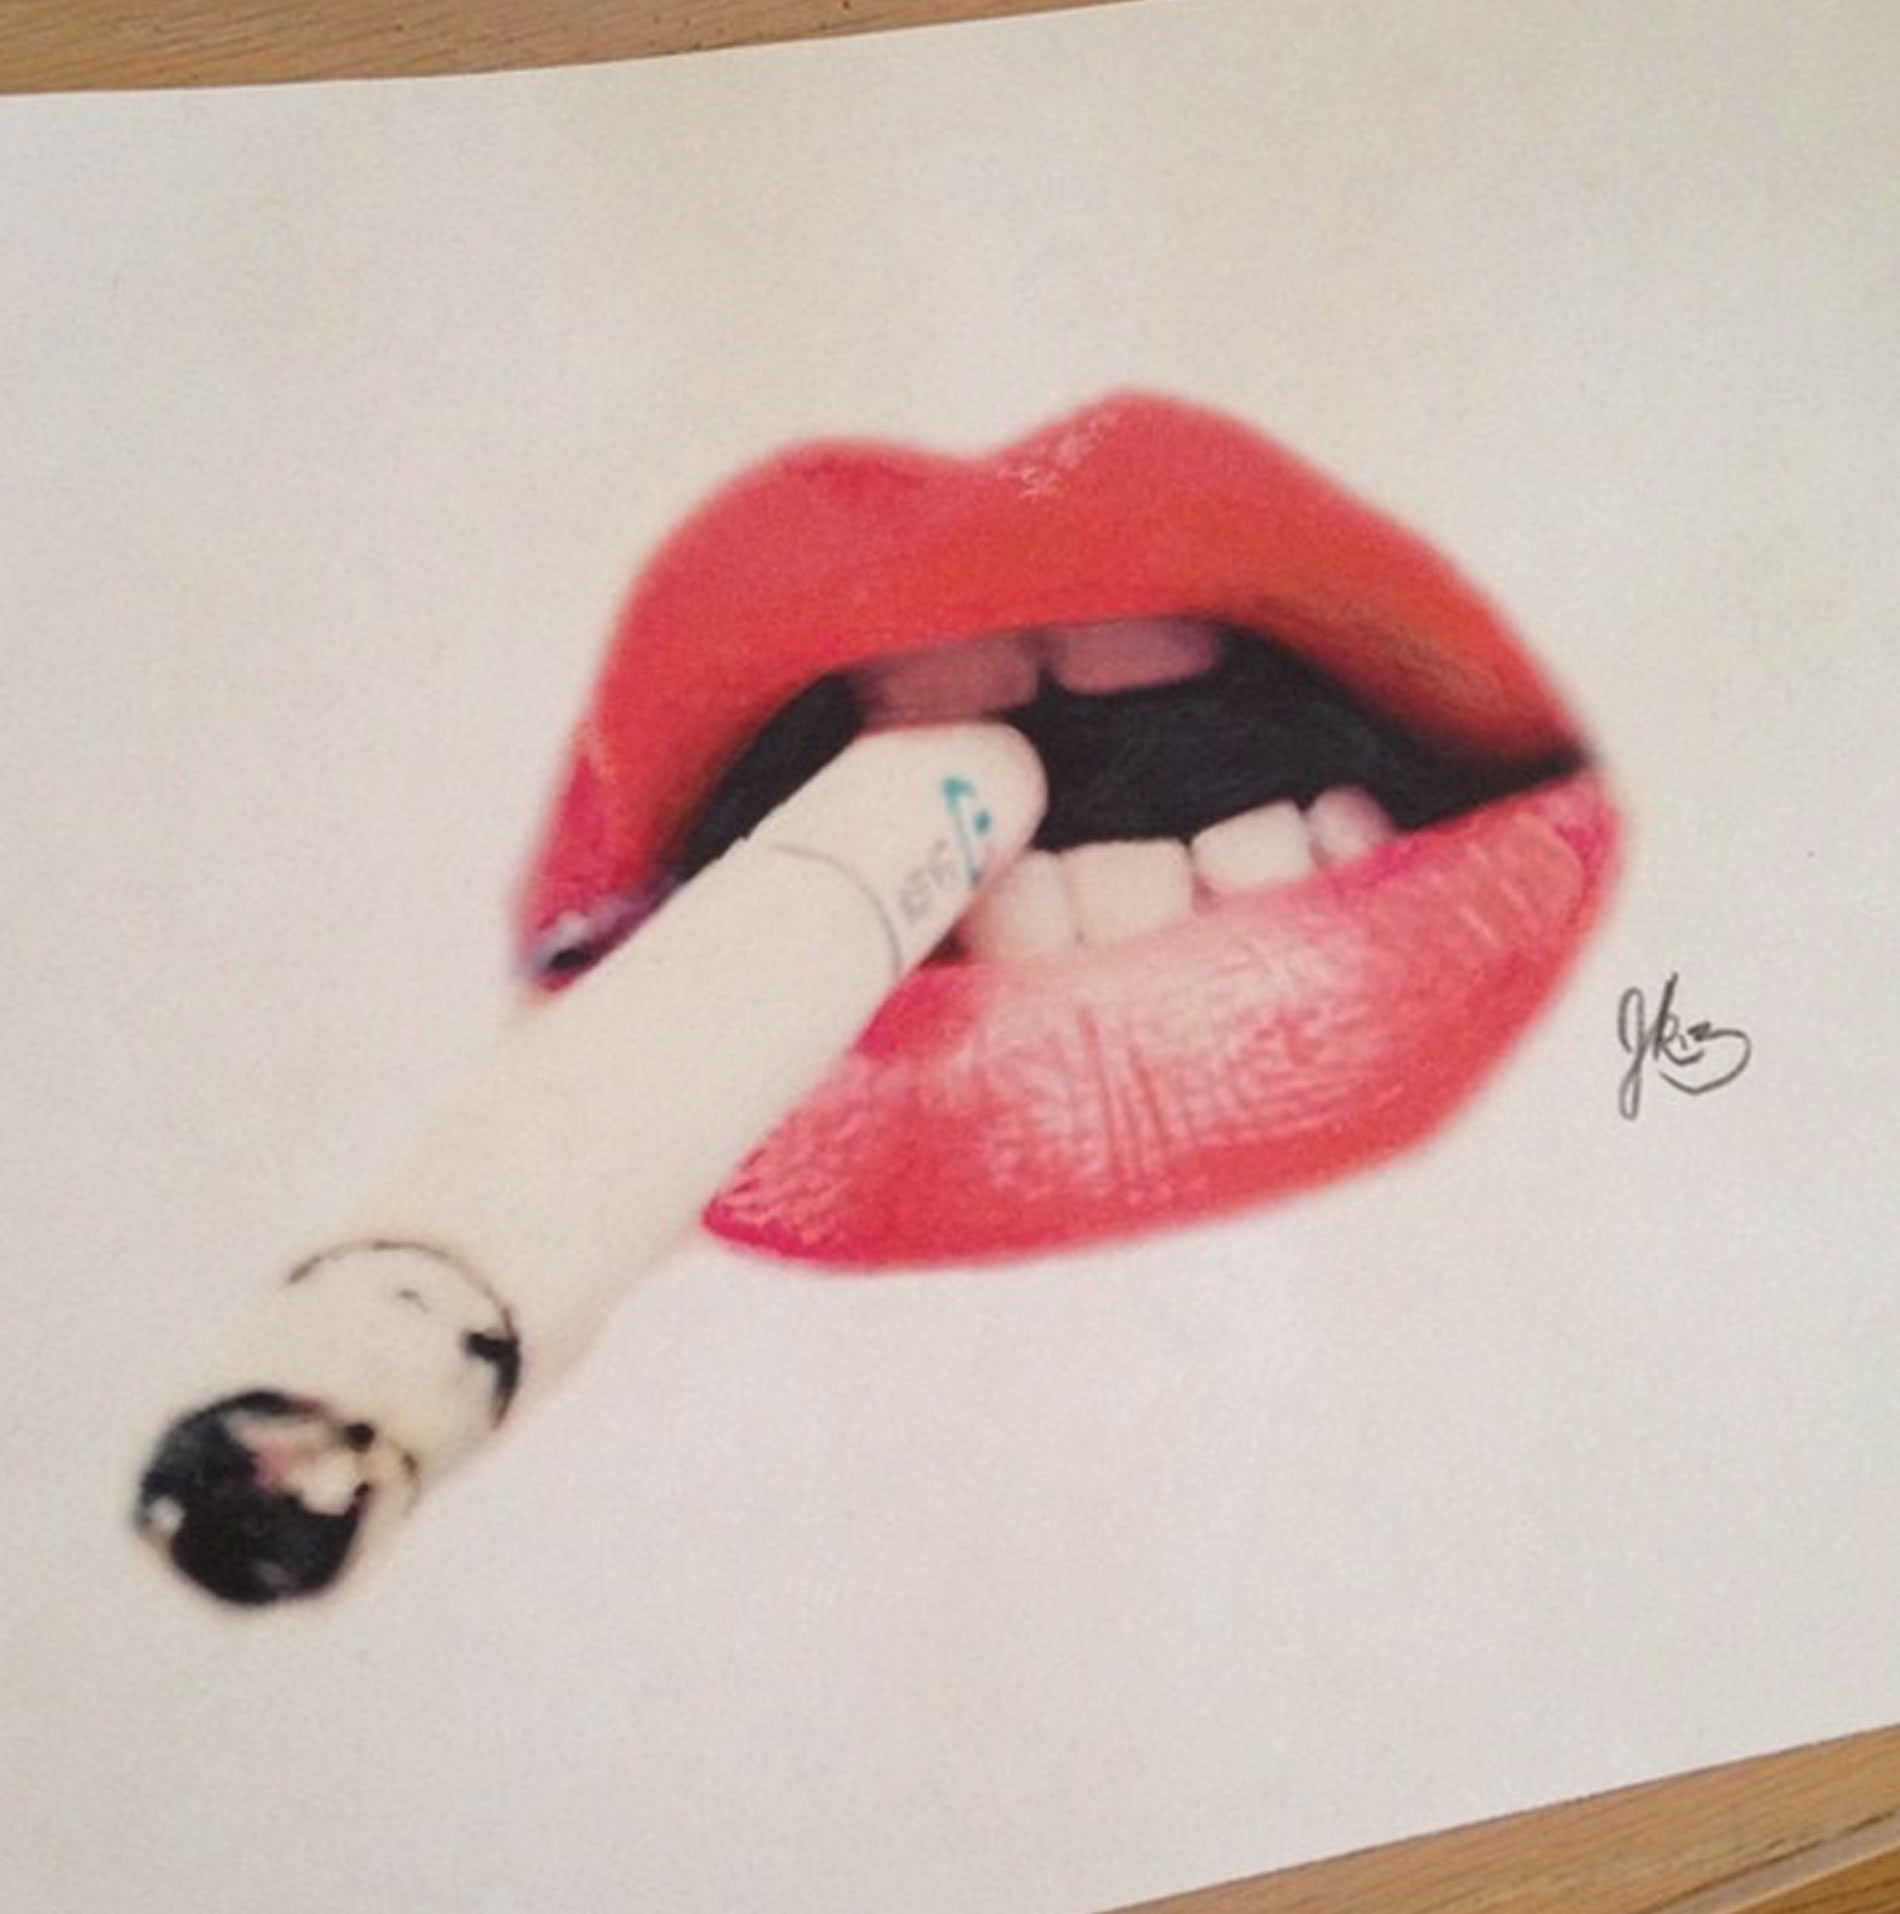 lips holding a cigarrette, 3d drawing by joshua krecioch